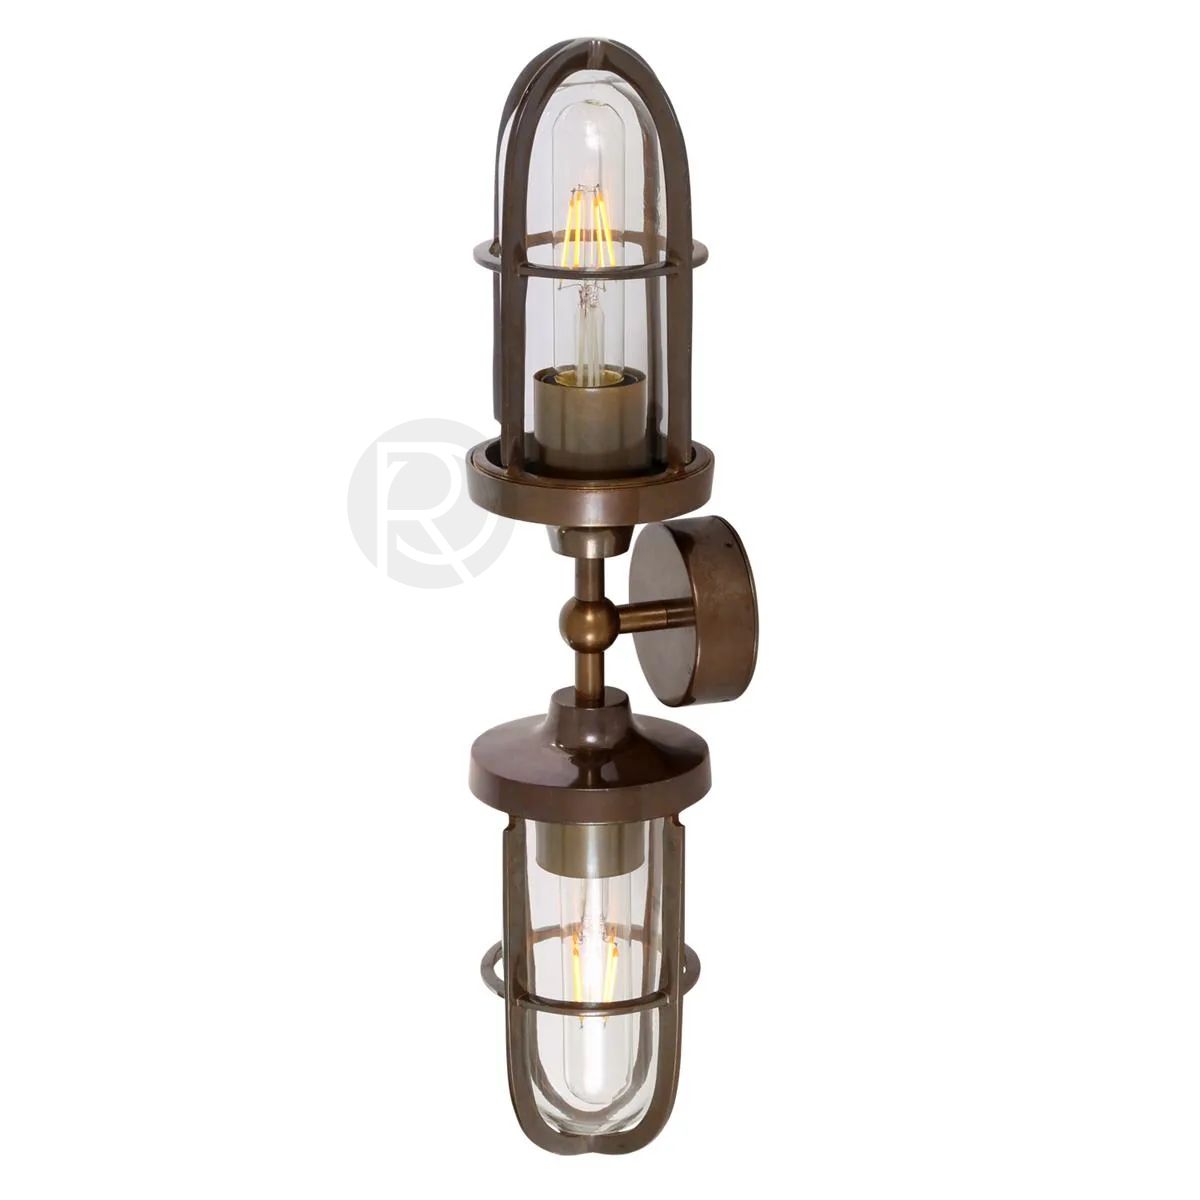 Designer wall lamp (Sconce) CLAYTON DOUBLE by Mullan Lighting